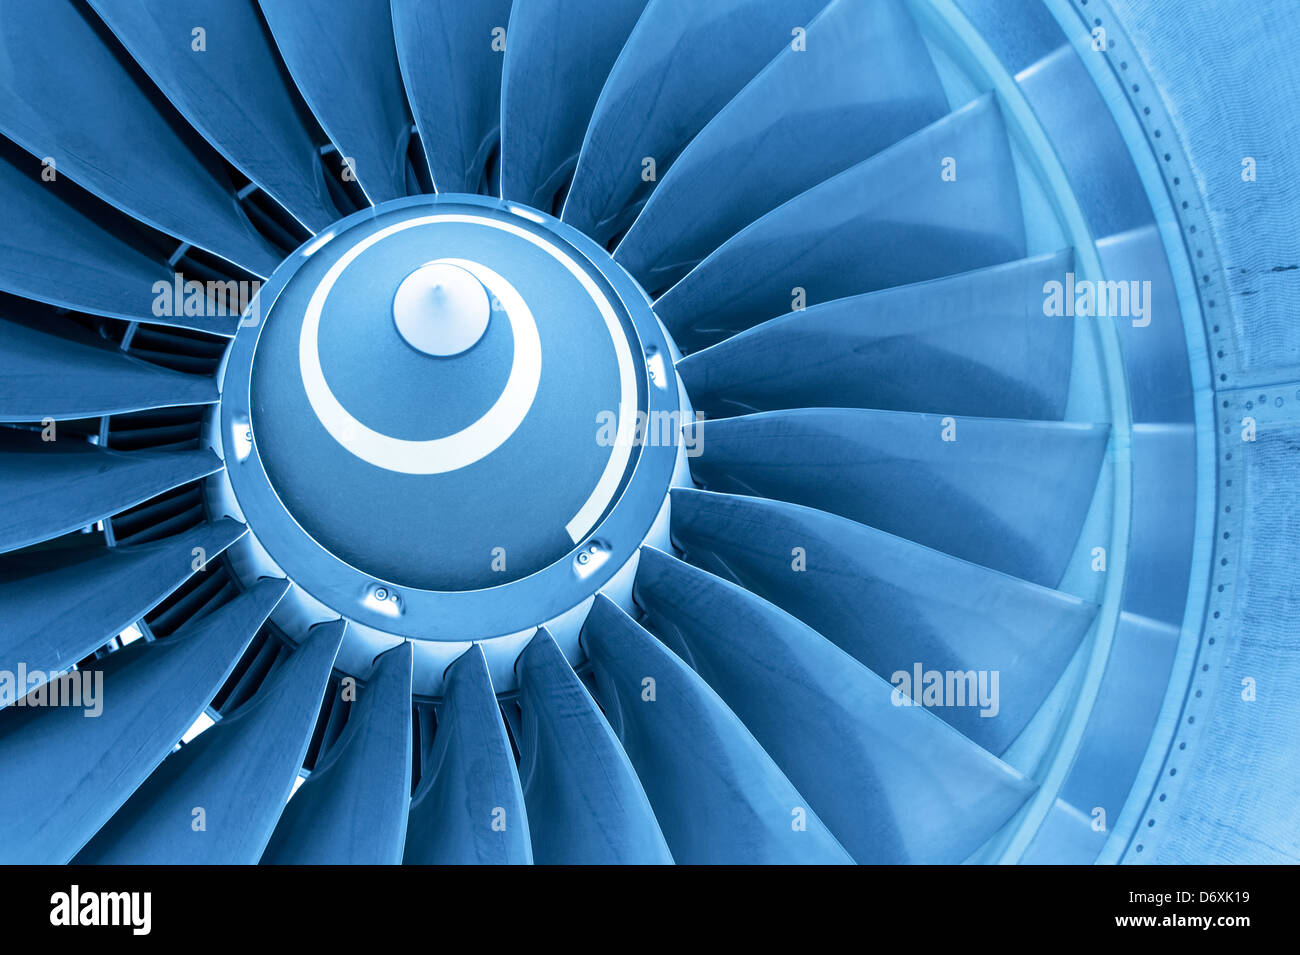 Titan blades of jet plane engine in blue light Stock Photo